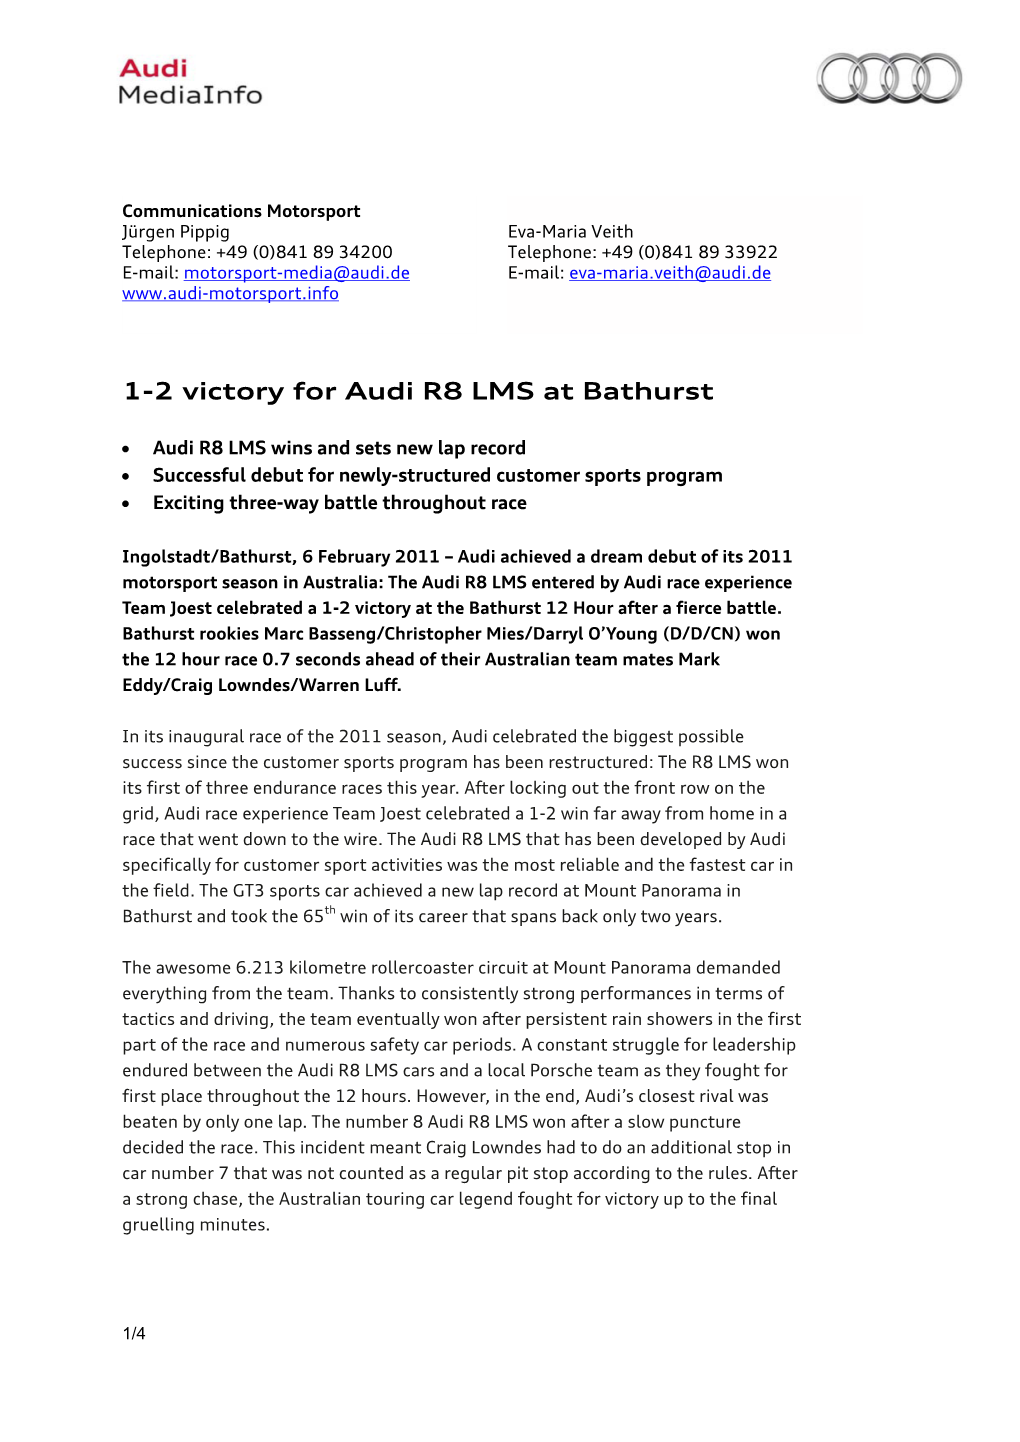 1-2 Victory for Audi R8 LMS at Bathurst